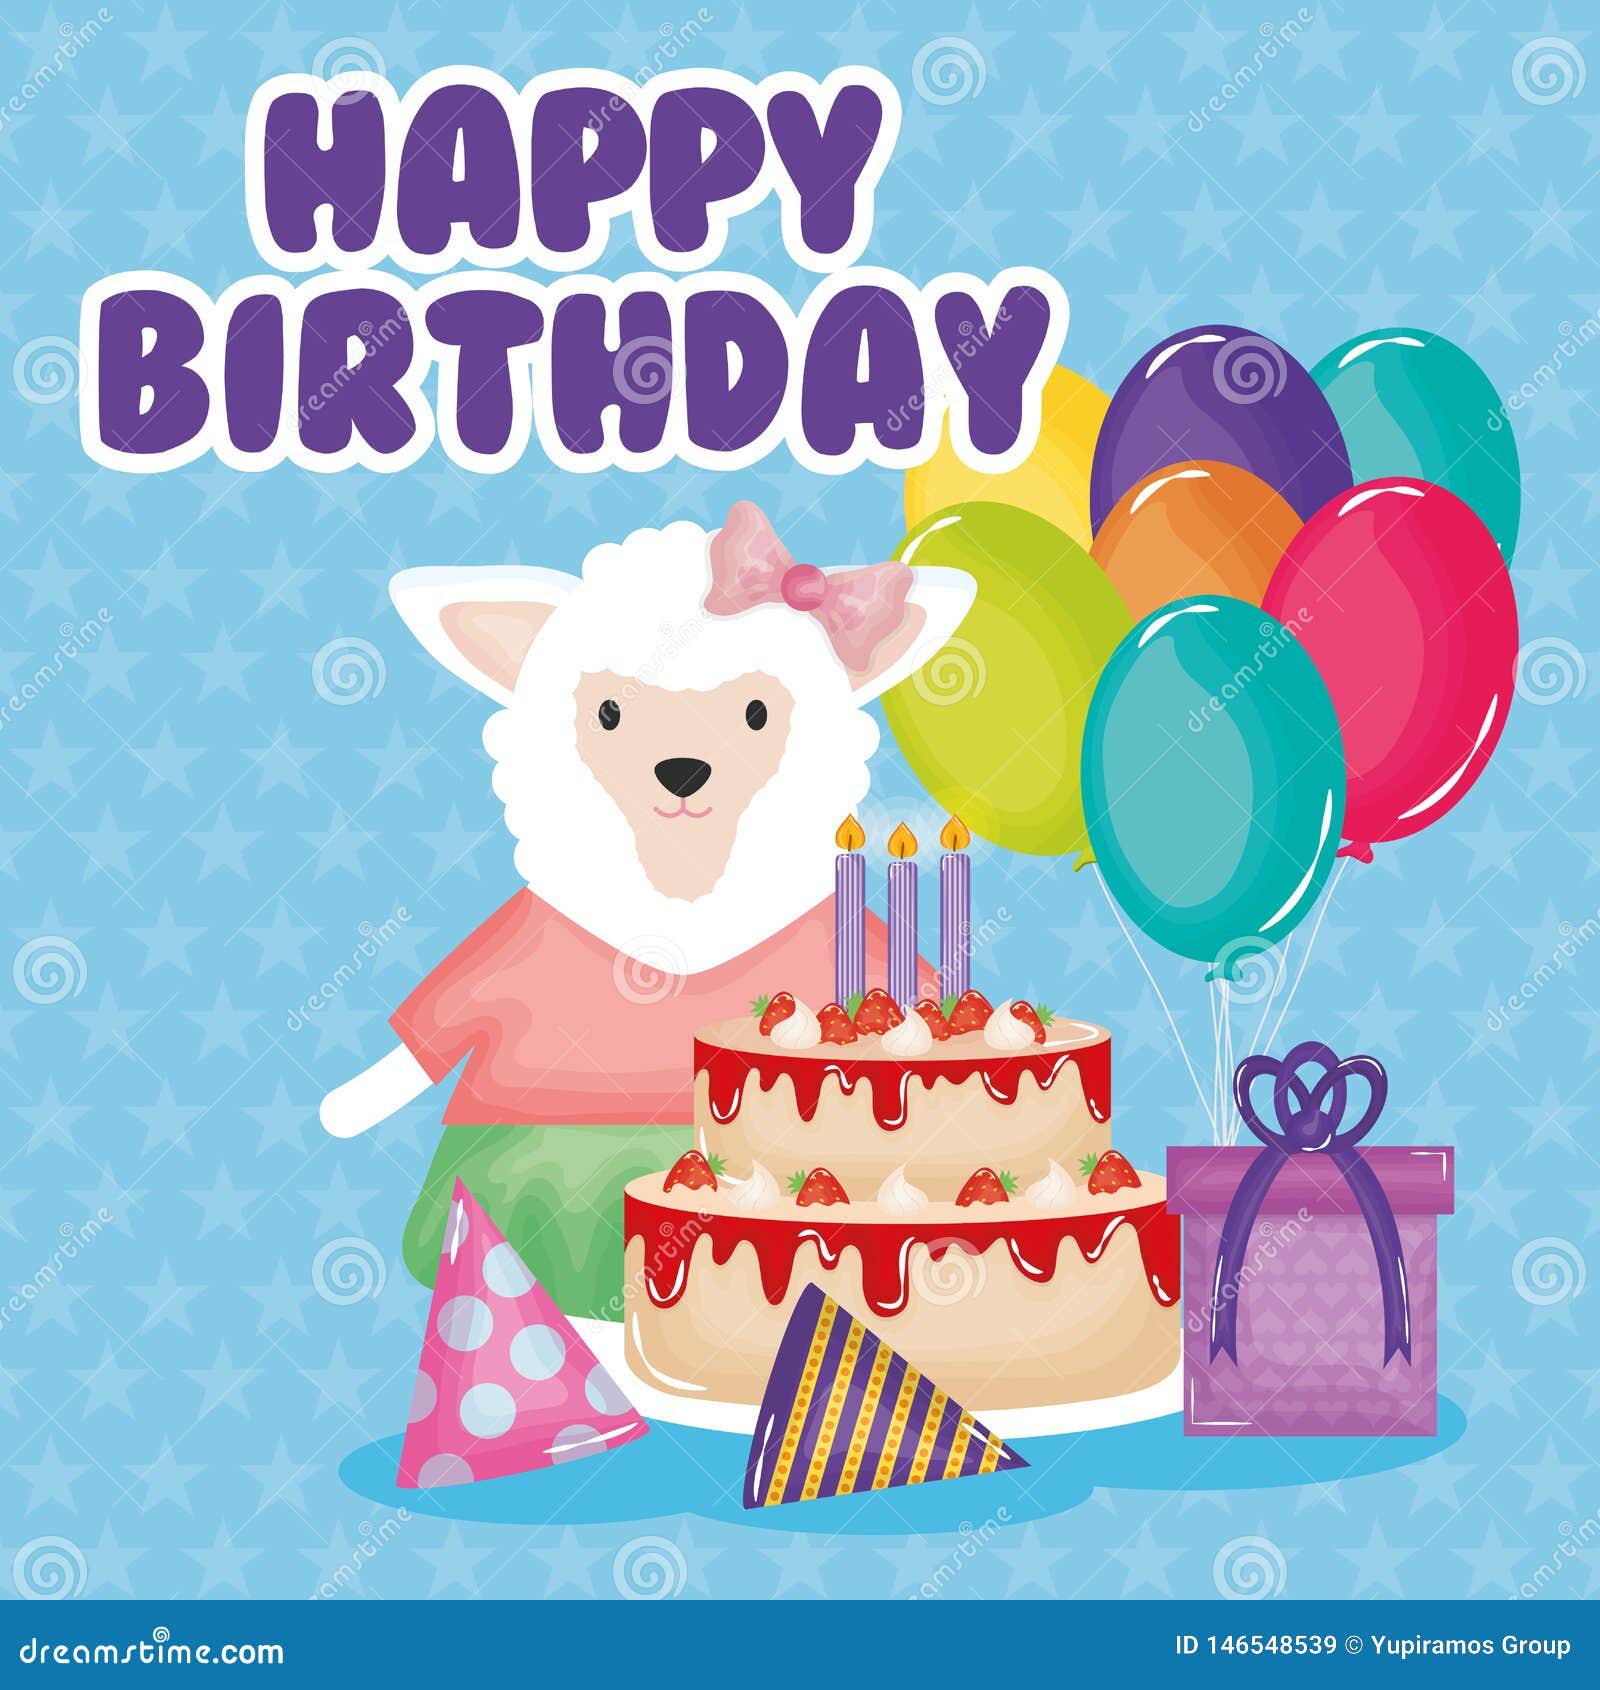 Happy Birthday Card with Rabbit Character Stock Vector - Illustration ...